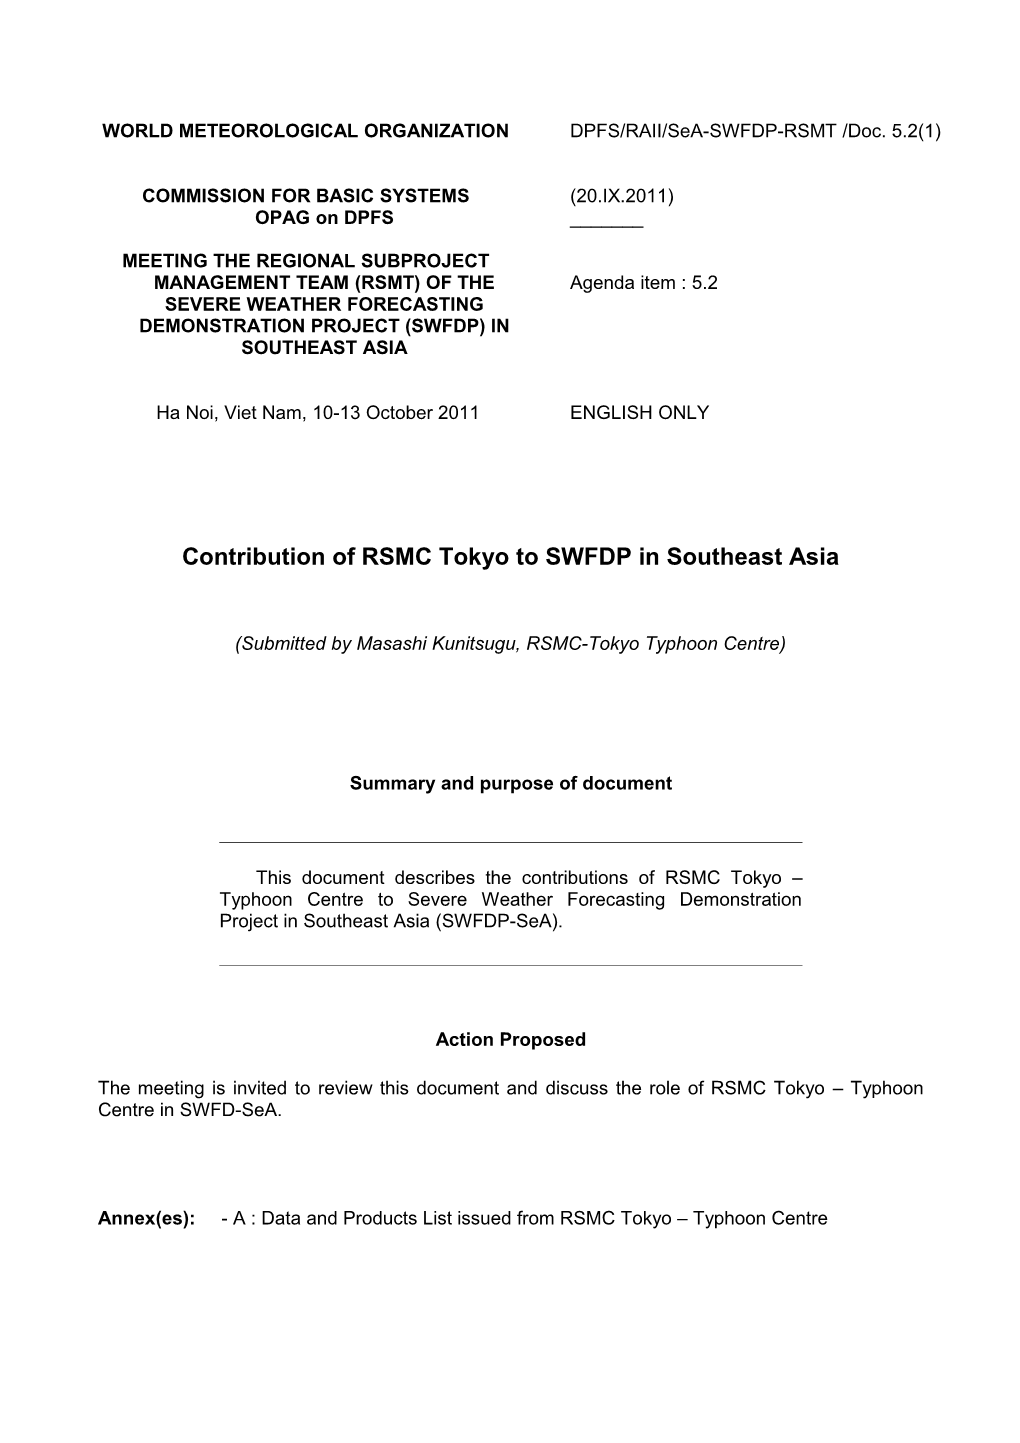 DPFS/RAII/Sea-SWFDP-RSMT/Doc. 5.2(1), P. 1